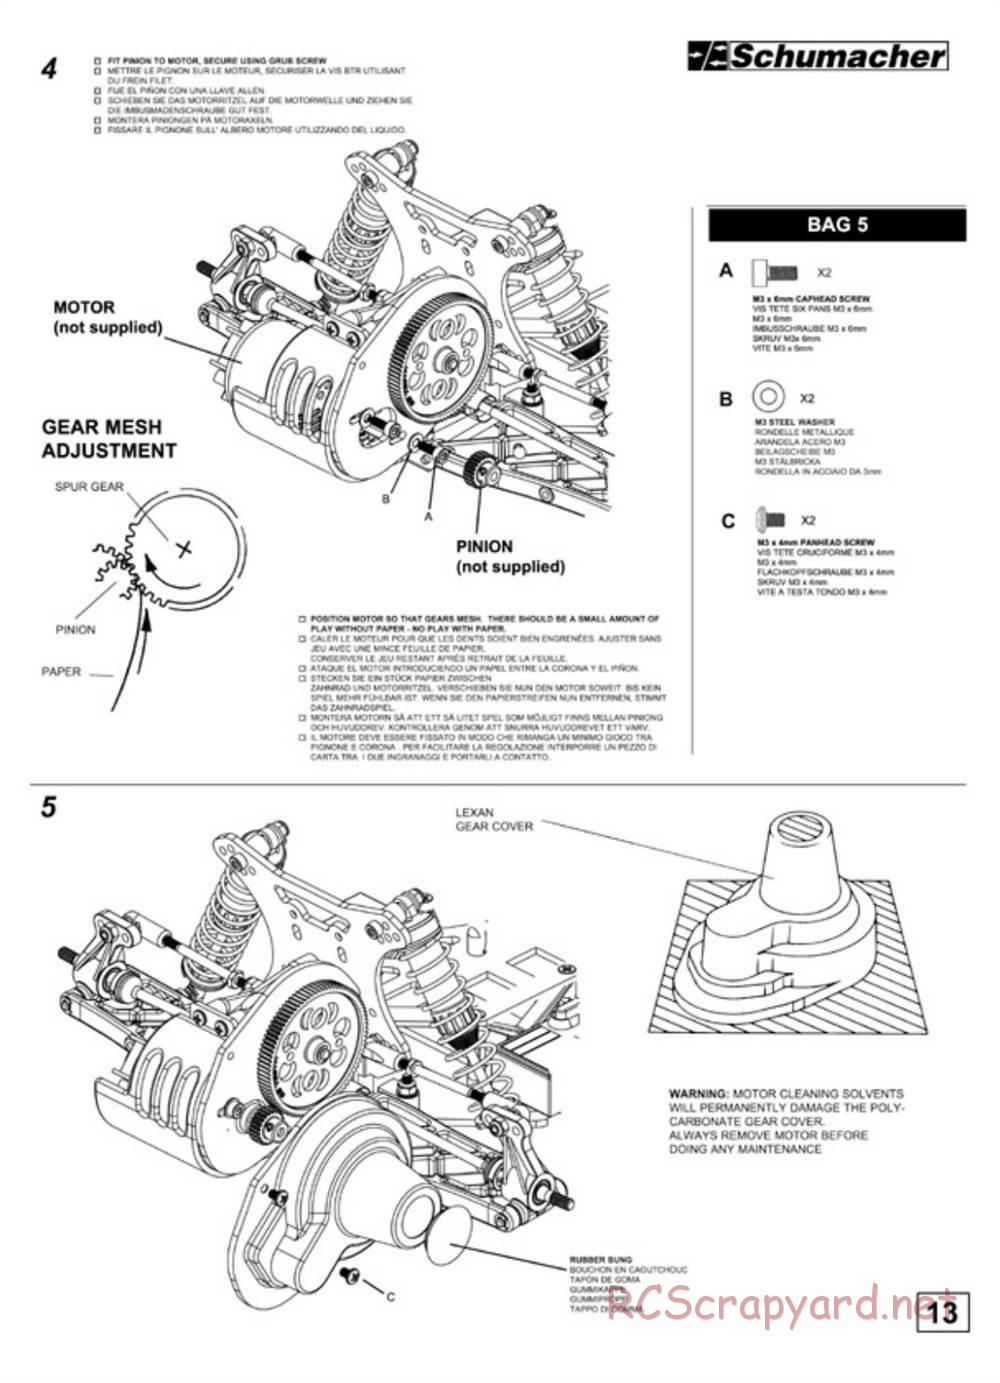 Schumacher - Fireblade Evo - Manual - Page 15